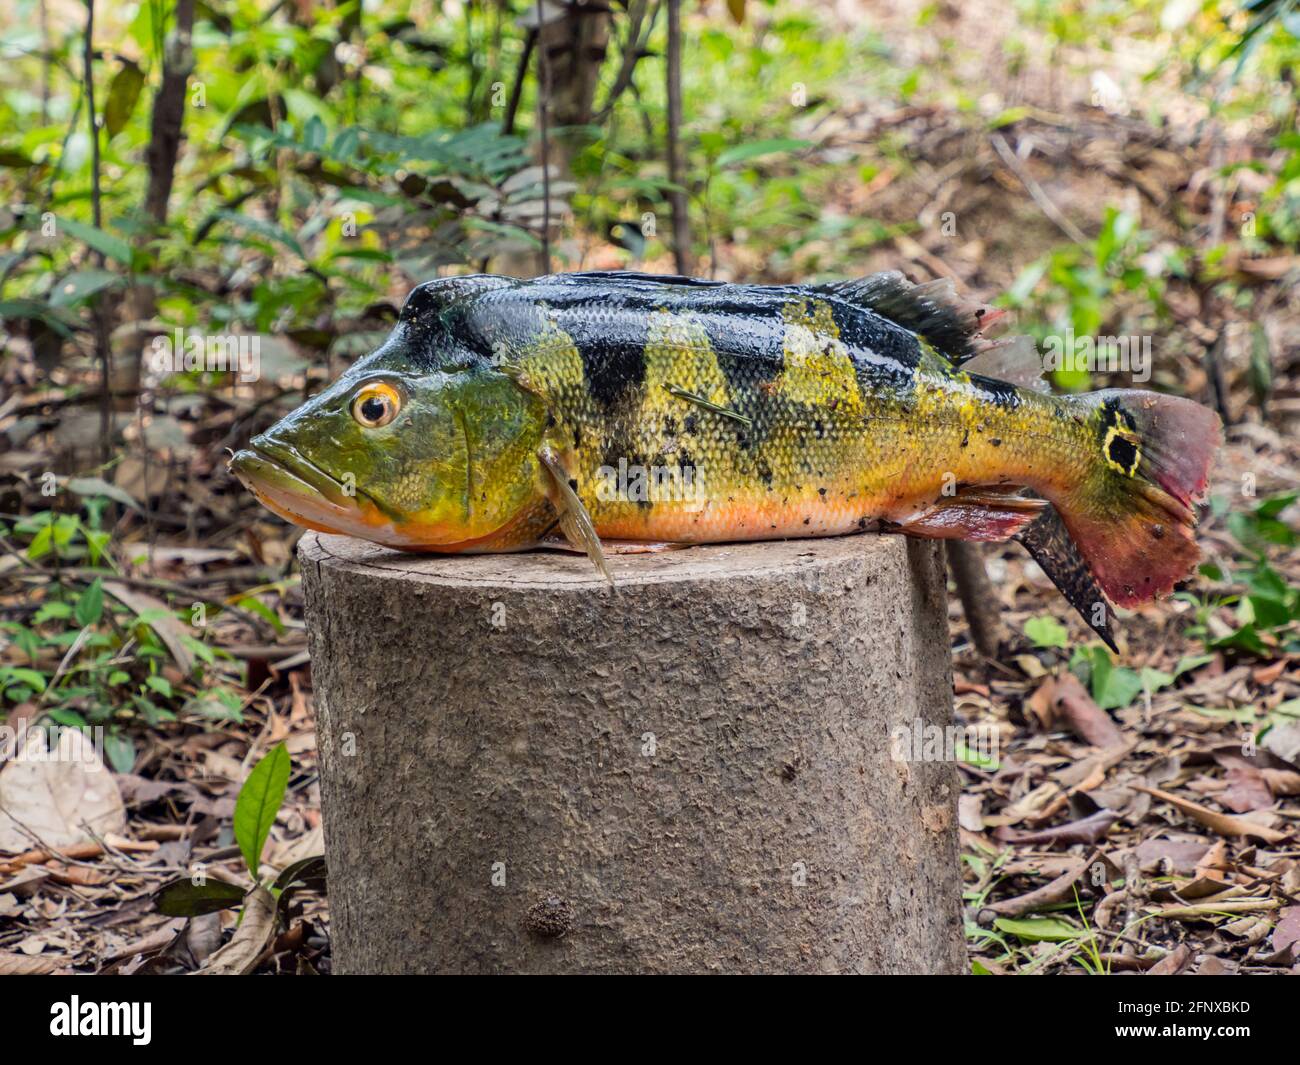 South American fish. Original name: Peacock Cichlid, Cichla ocellaris. Amazonia. Stock Photo